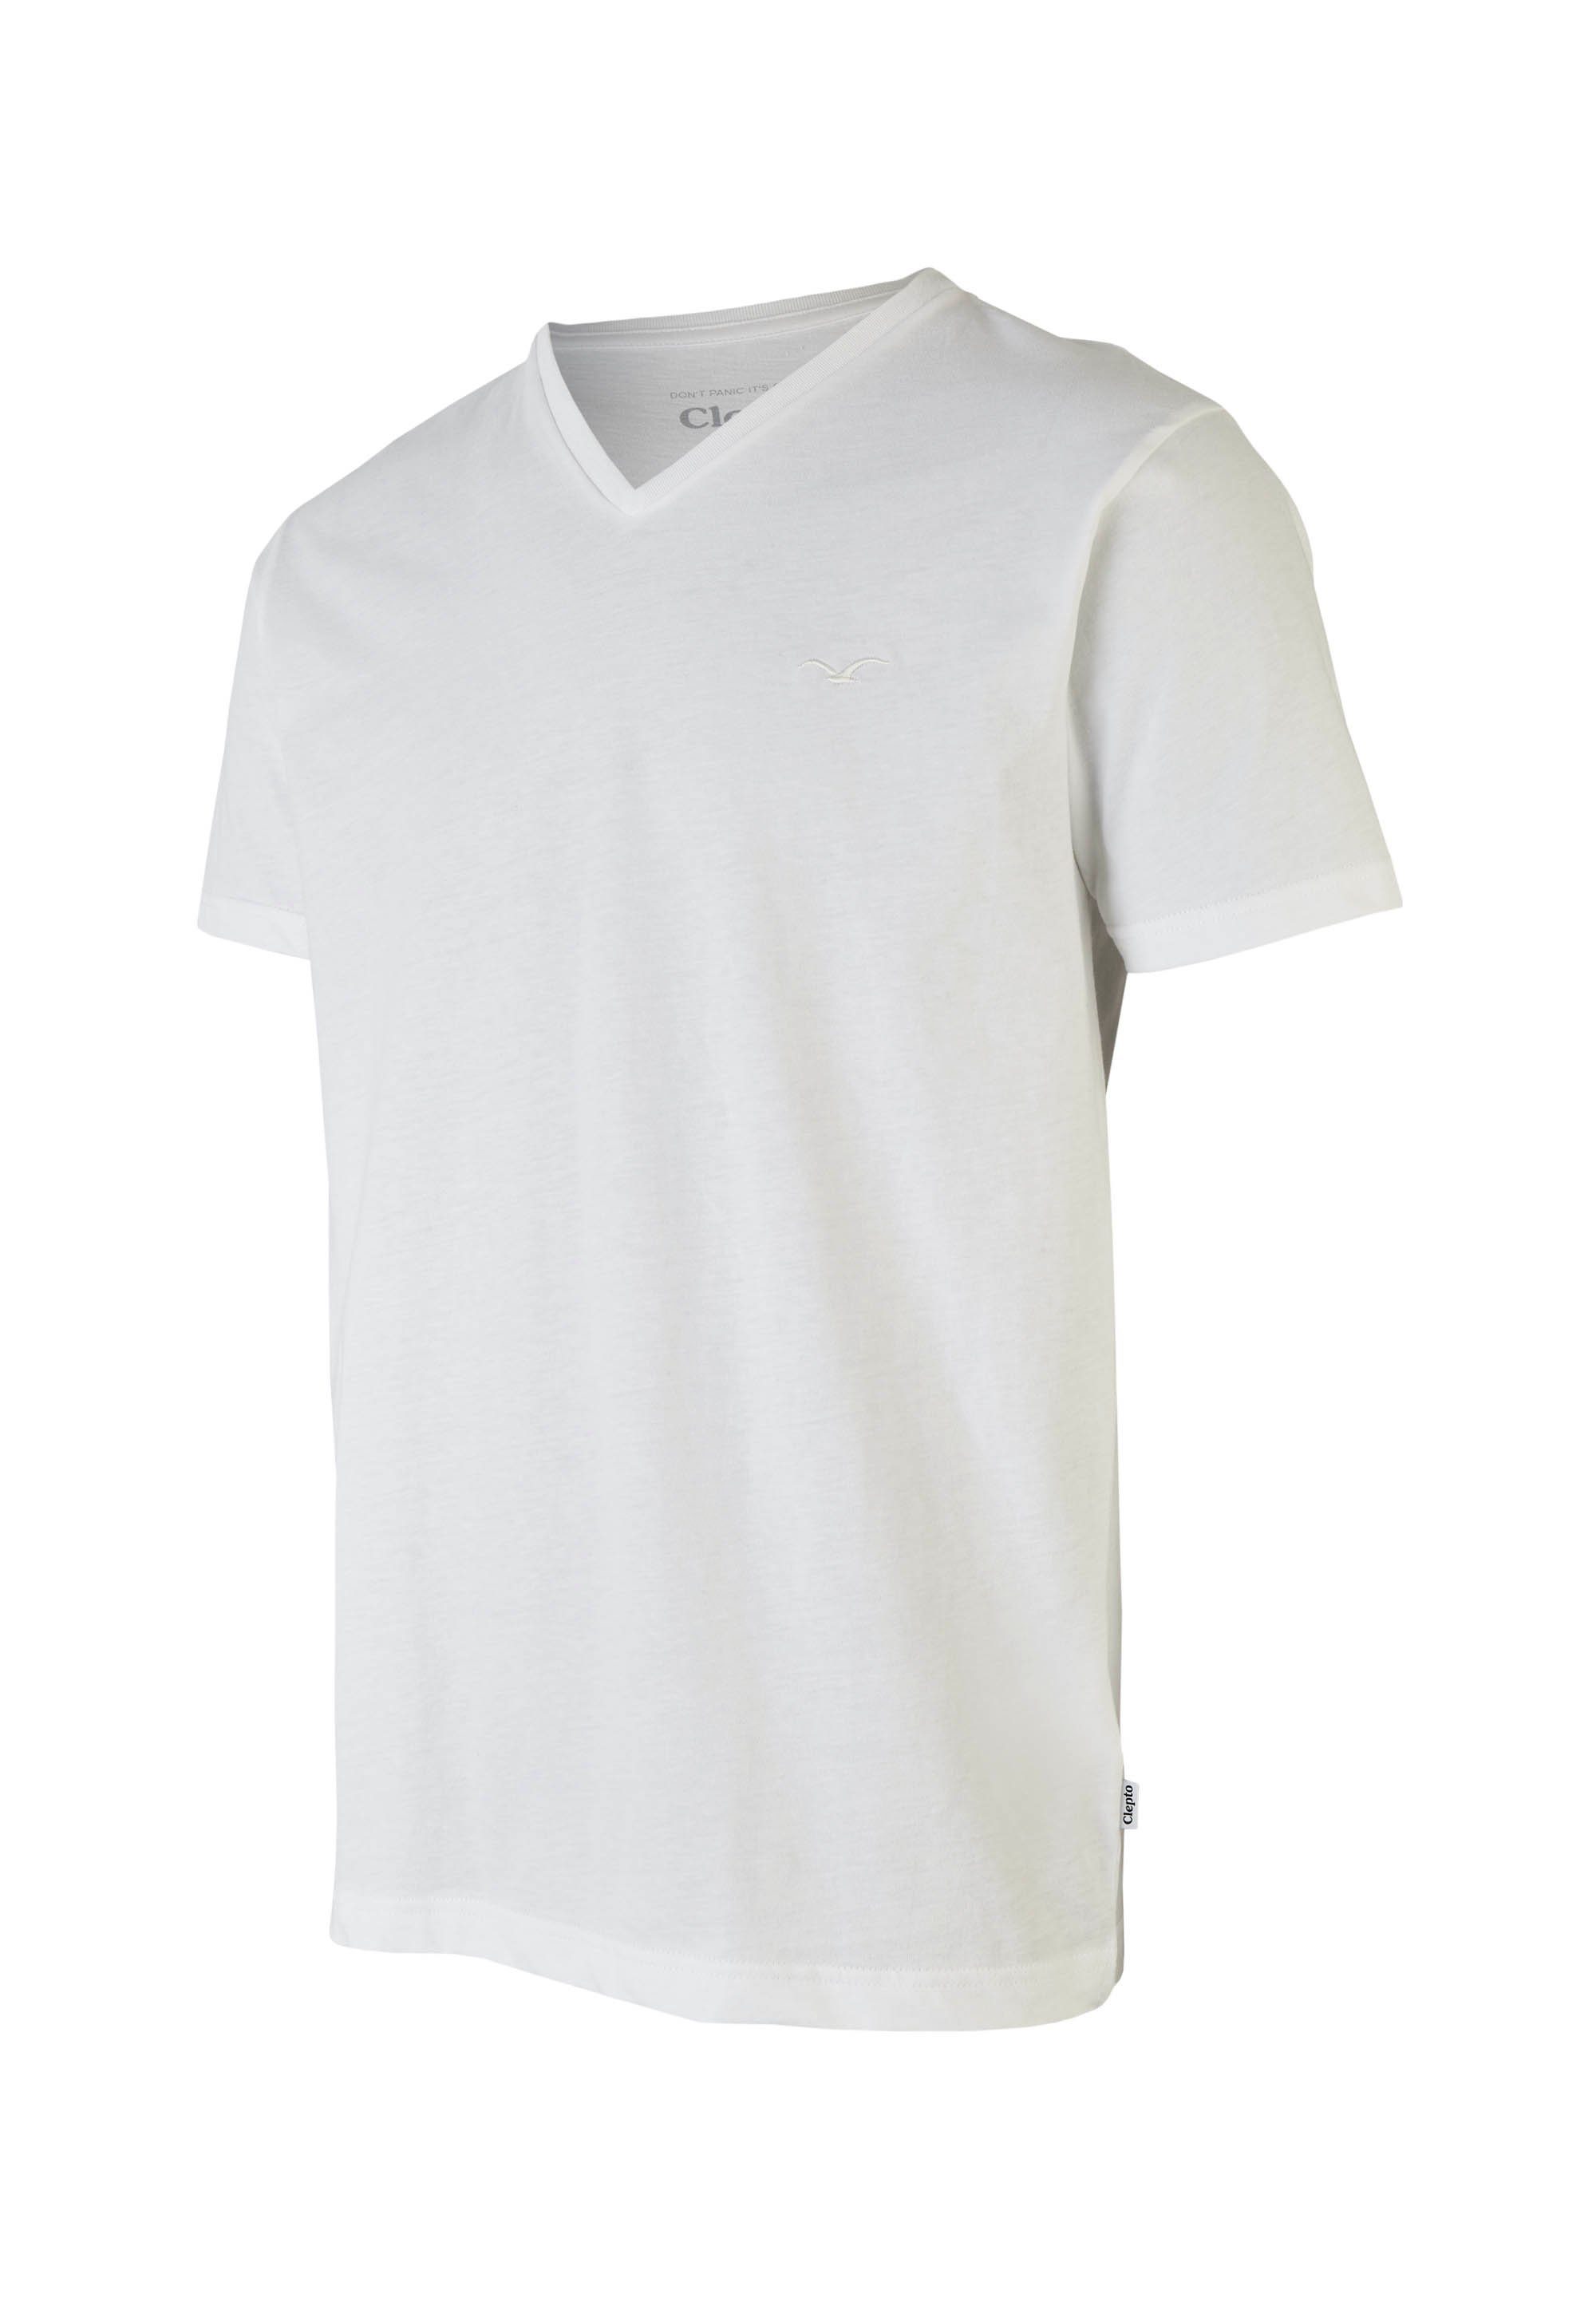 Schnitt Cleptomanicx T-Shirt mit Regular weiß V lockerem Ligull